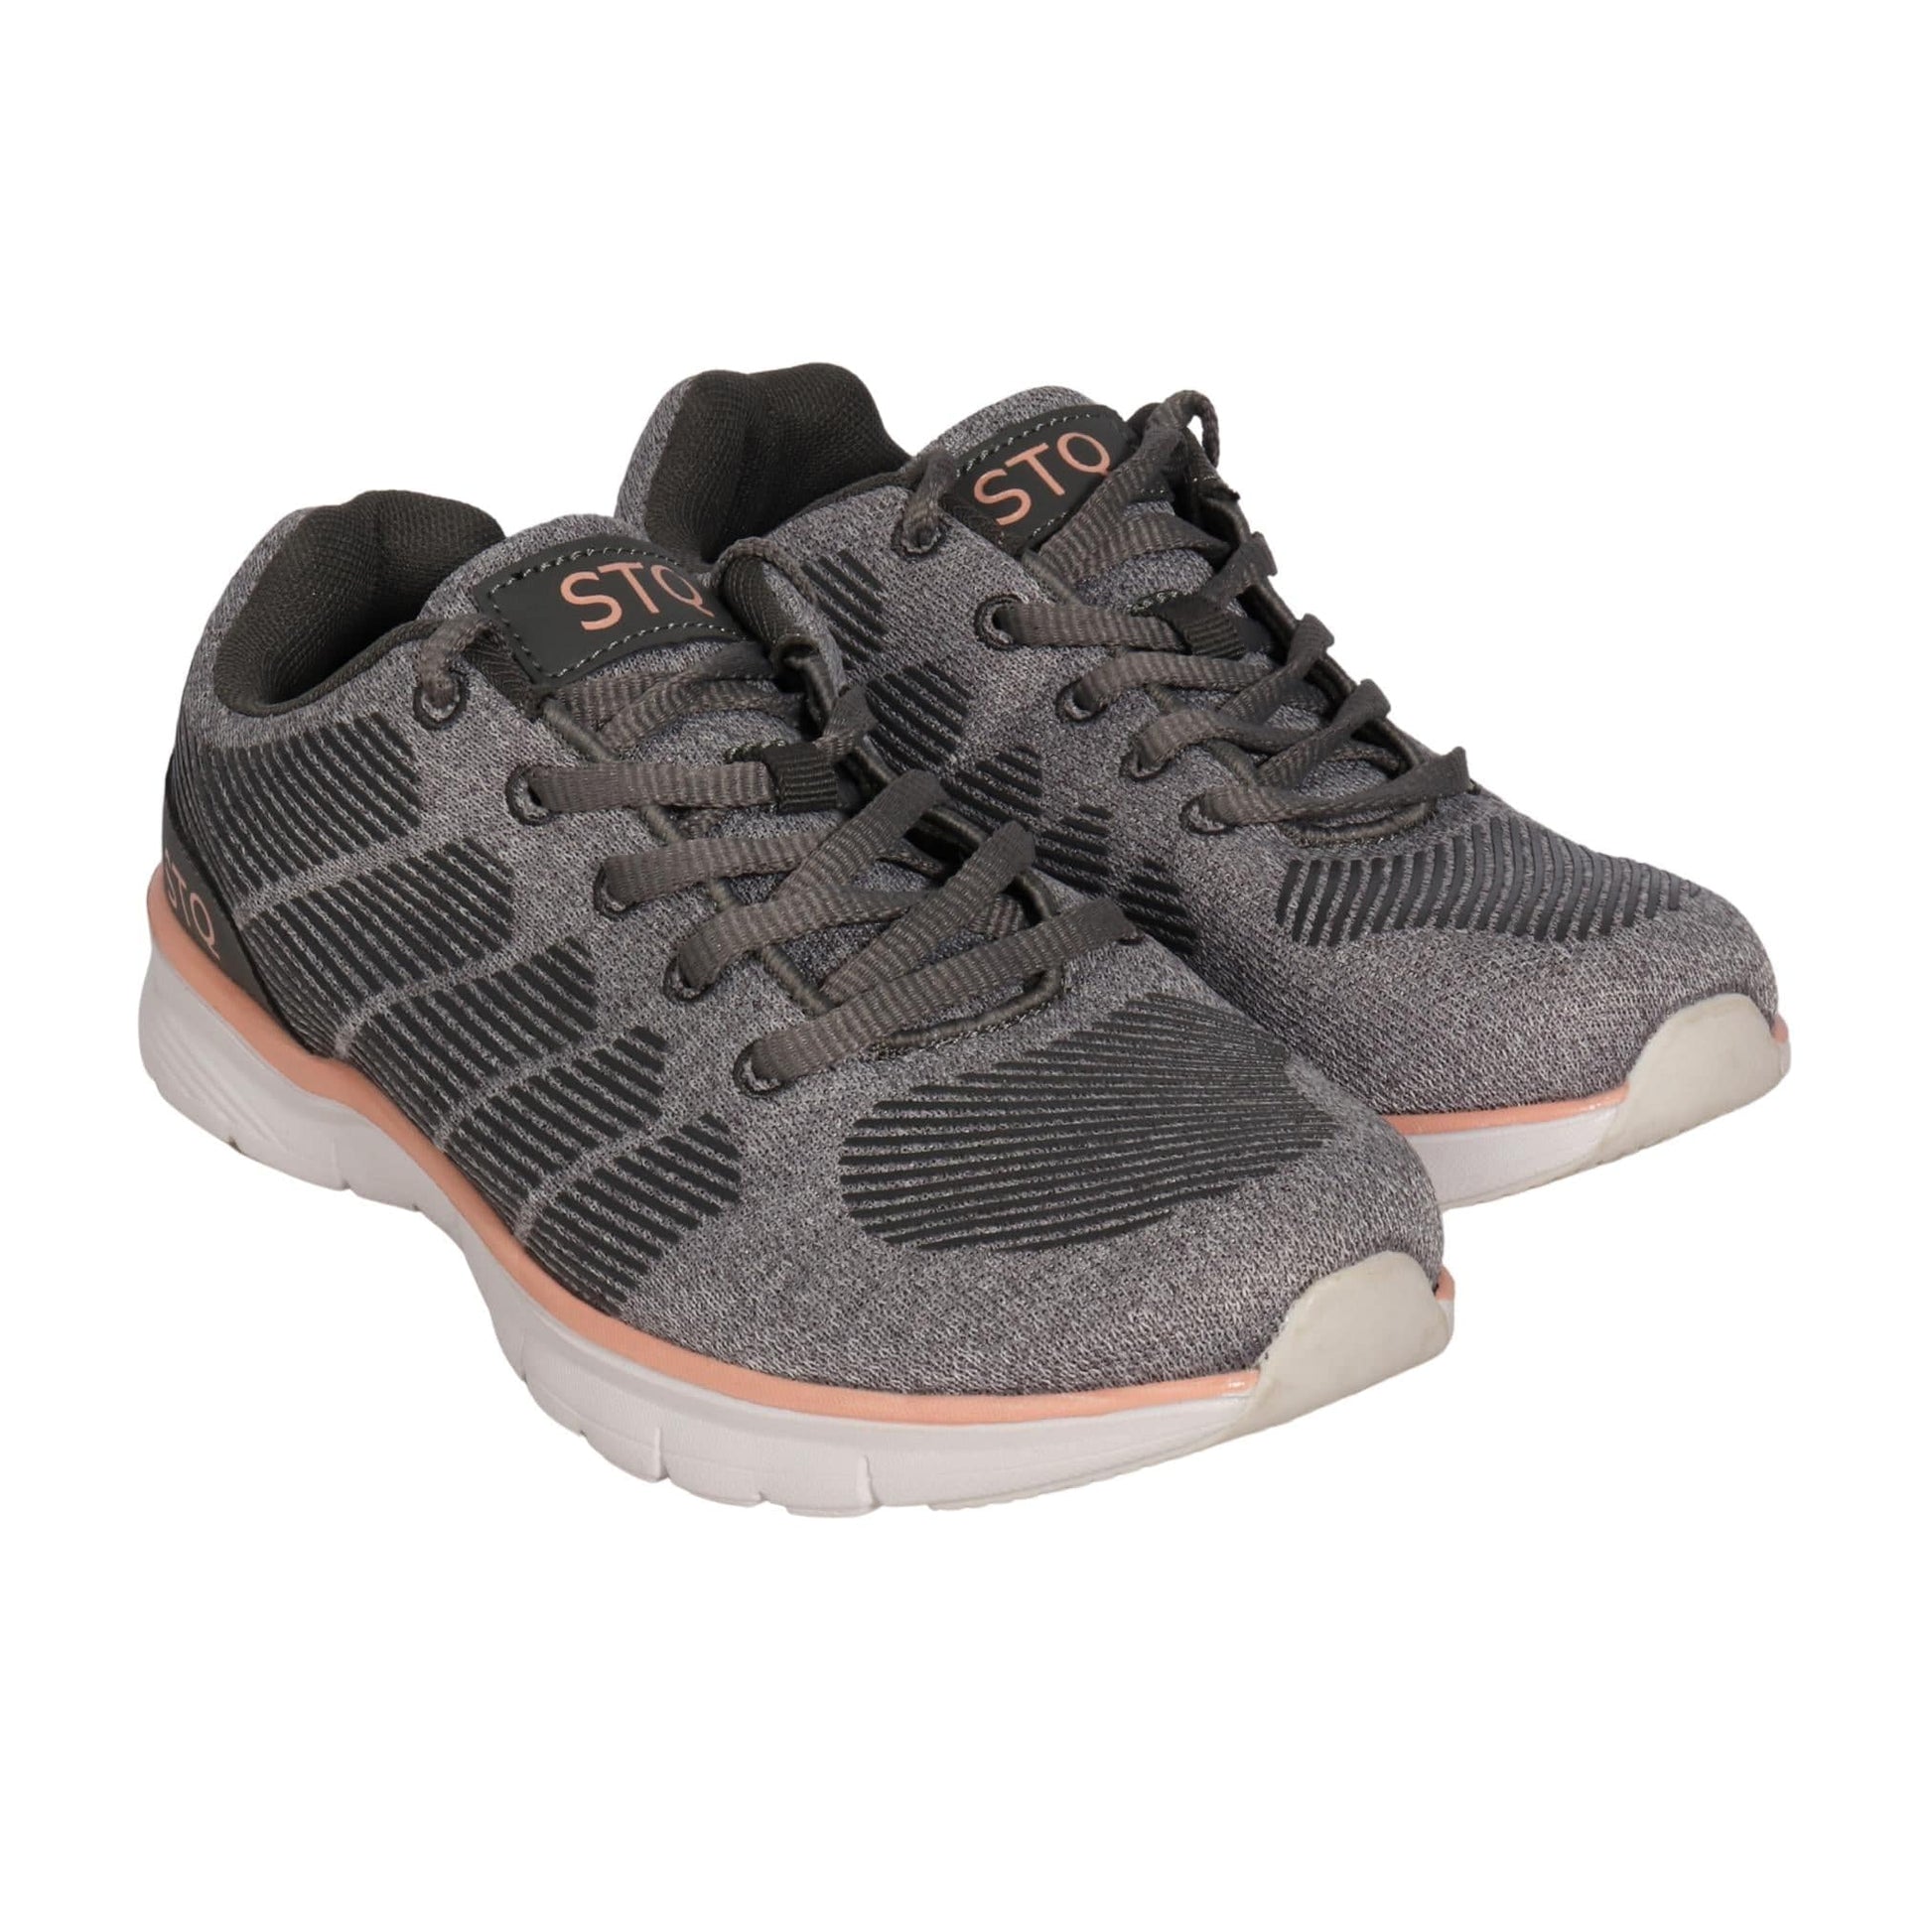 STQ Athletic Shoes 38 / Grey STQ - Breathable Fashion Sneakers